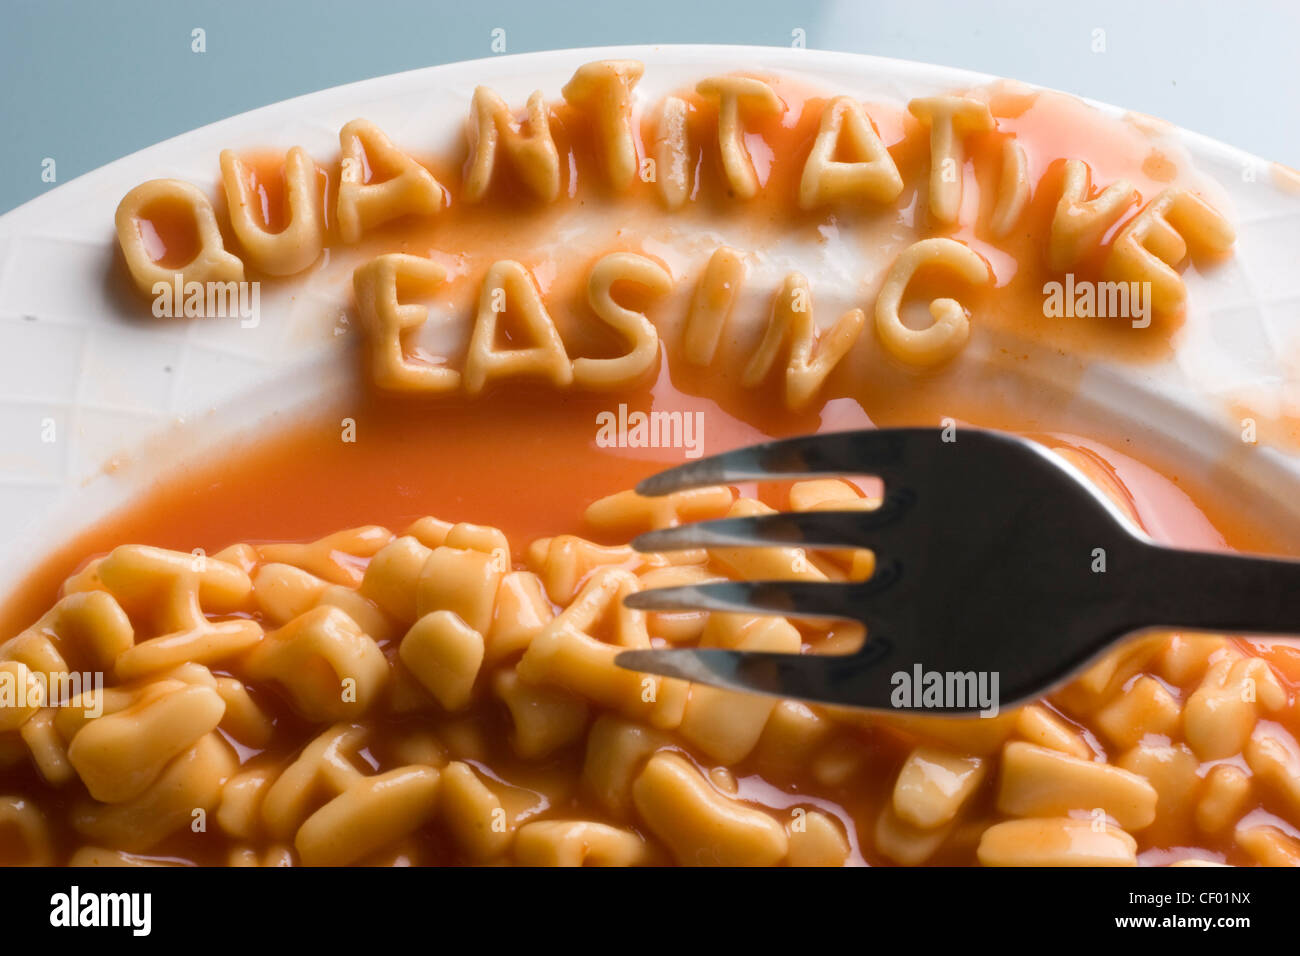 quantitative easing made out of alphabetti spaghetti letters Stock Photo